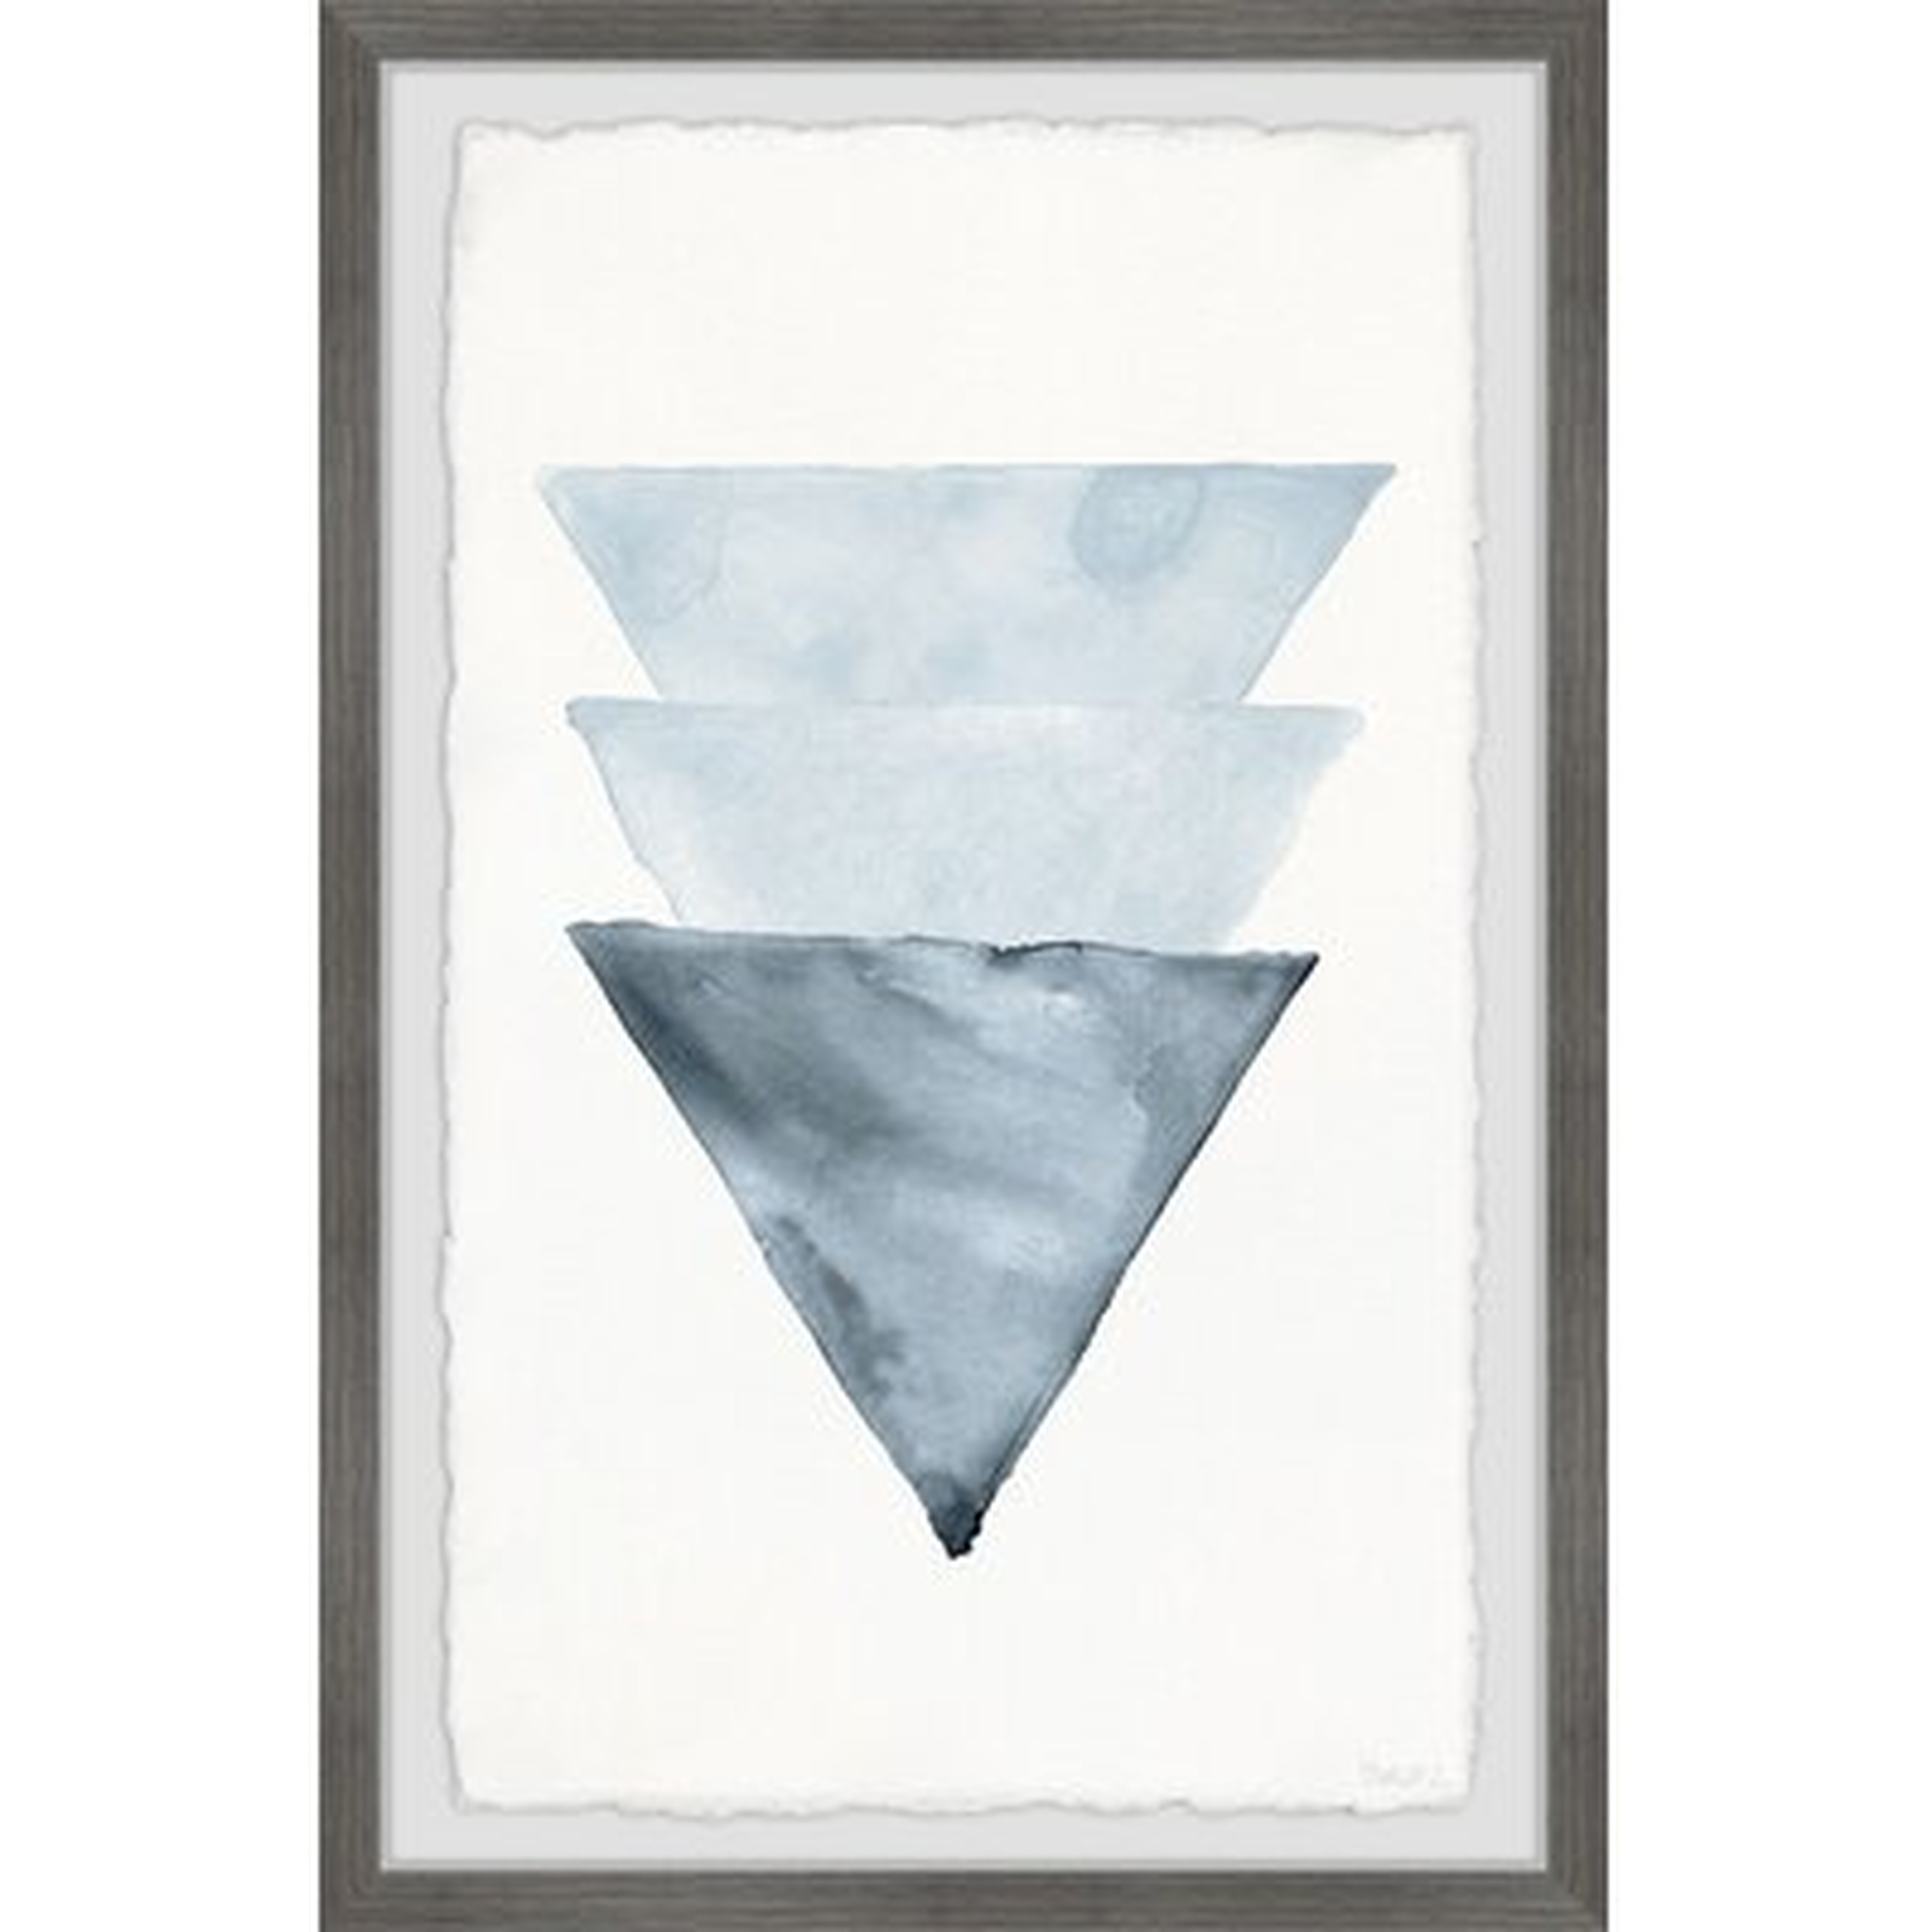 Triangles Overlap by Parvez Taj - Picture Frame Print on Paper - Wayfair